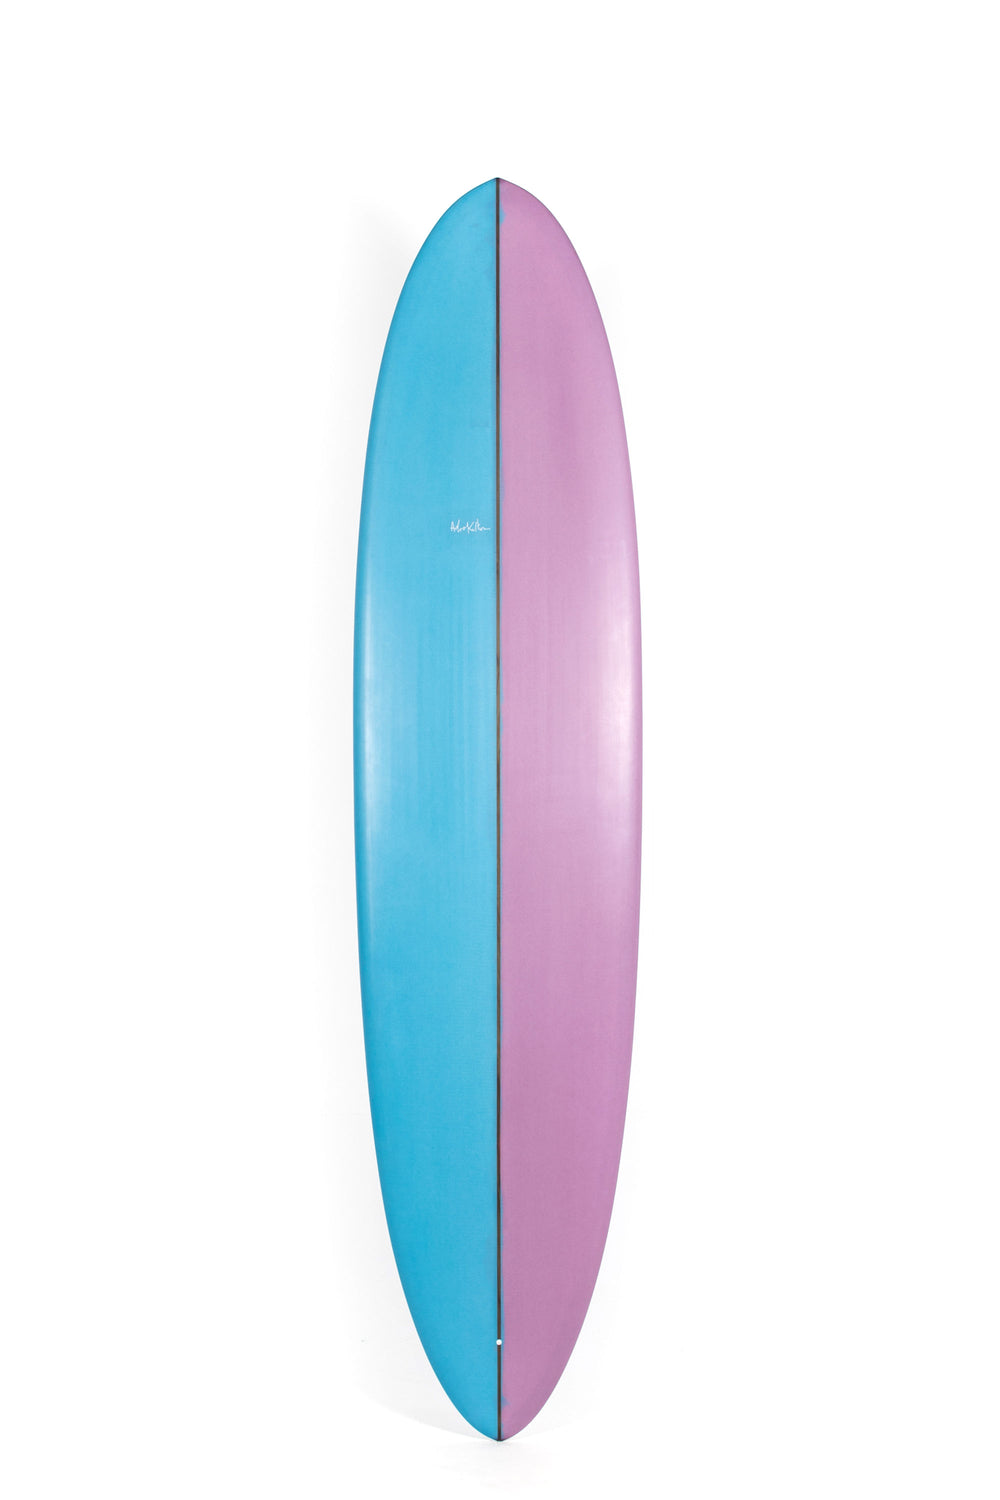 Pukas Surf Shop - Adrokultura Surfboards - SINGLE EGG - 8'1